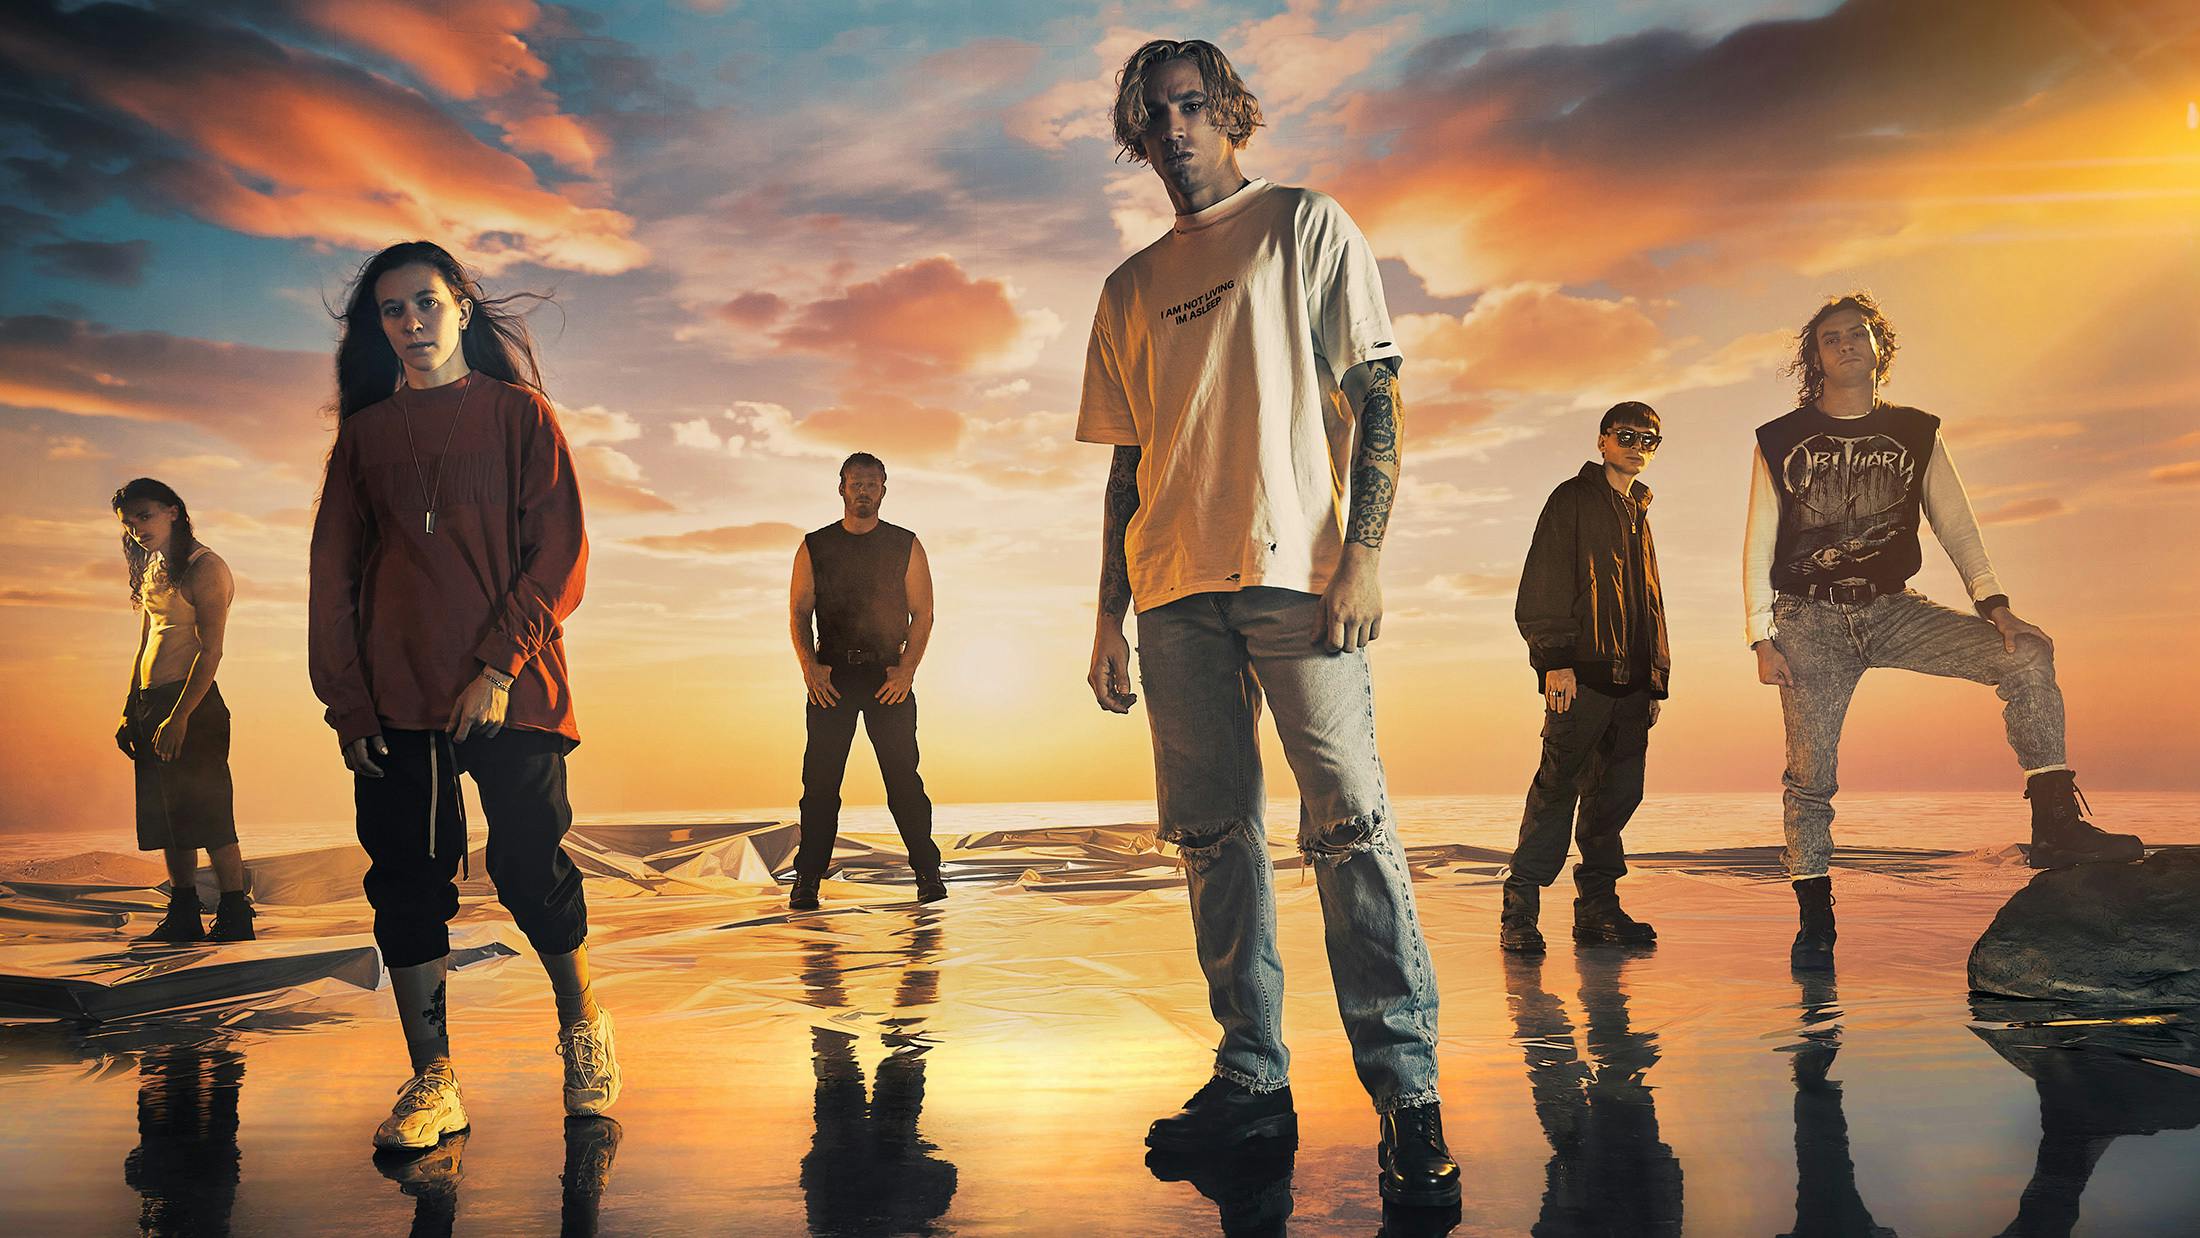 Code Orange announce new album The Above